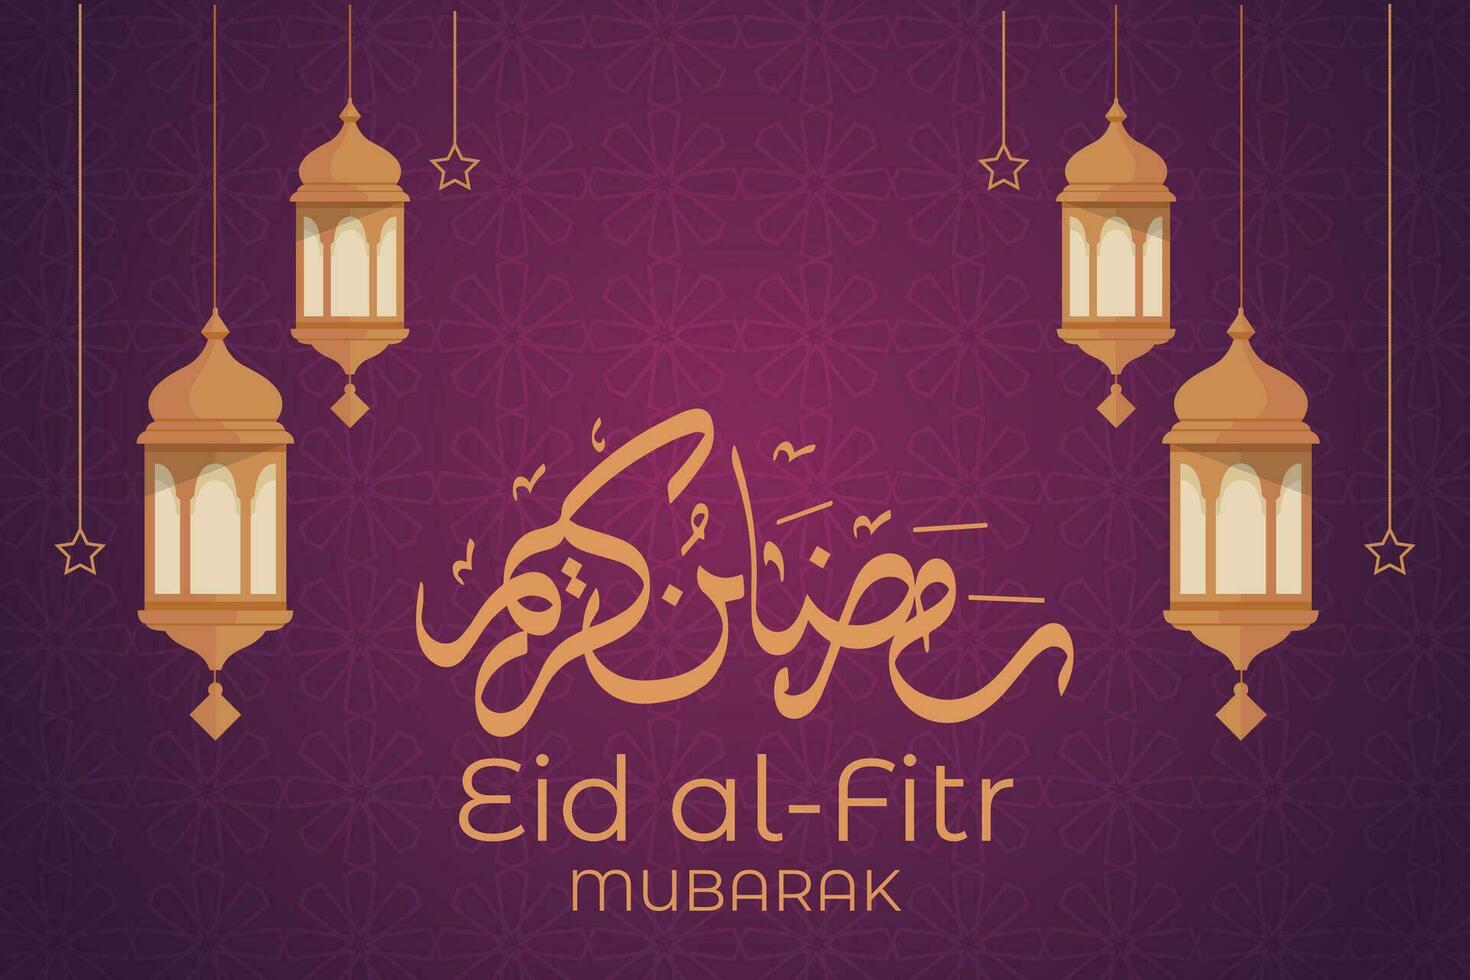 eid al fitr mubarak greeting card with lanterns and stars vector